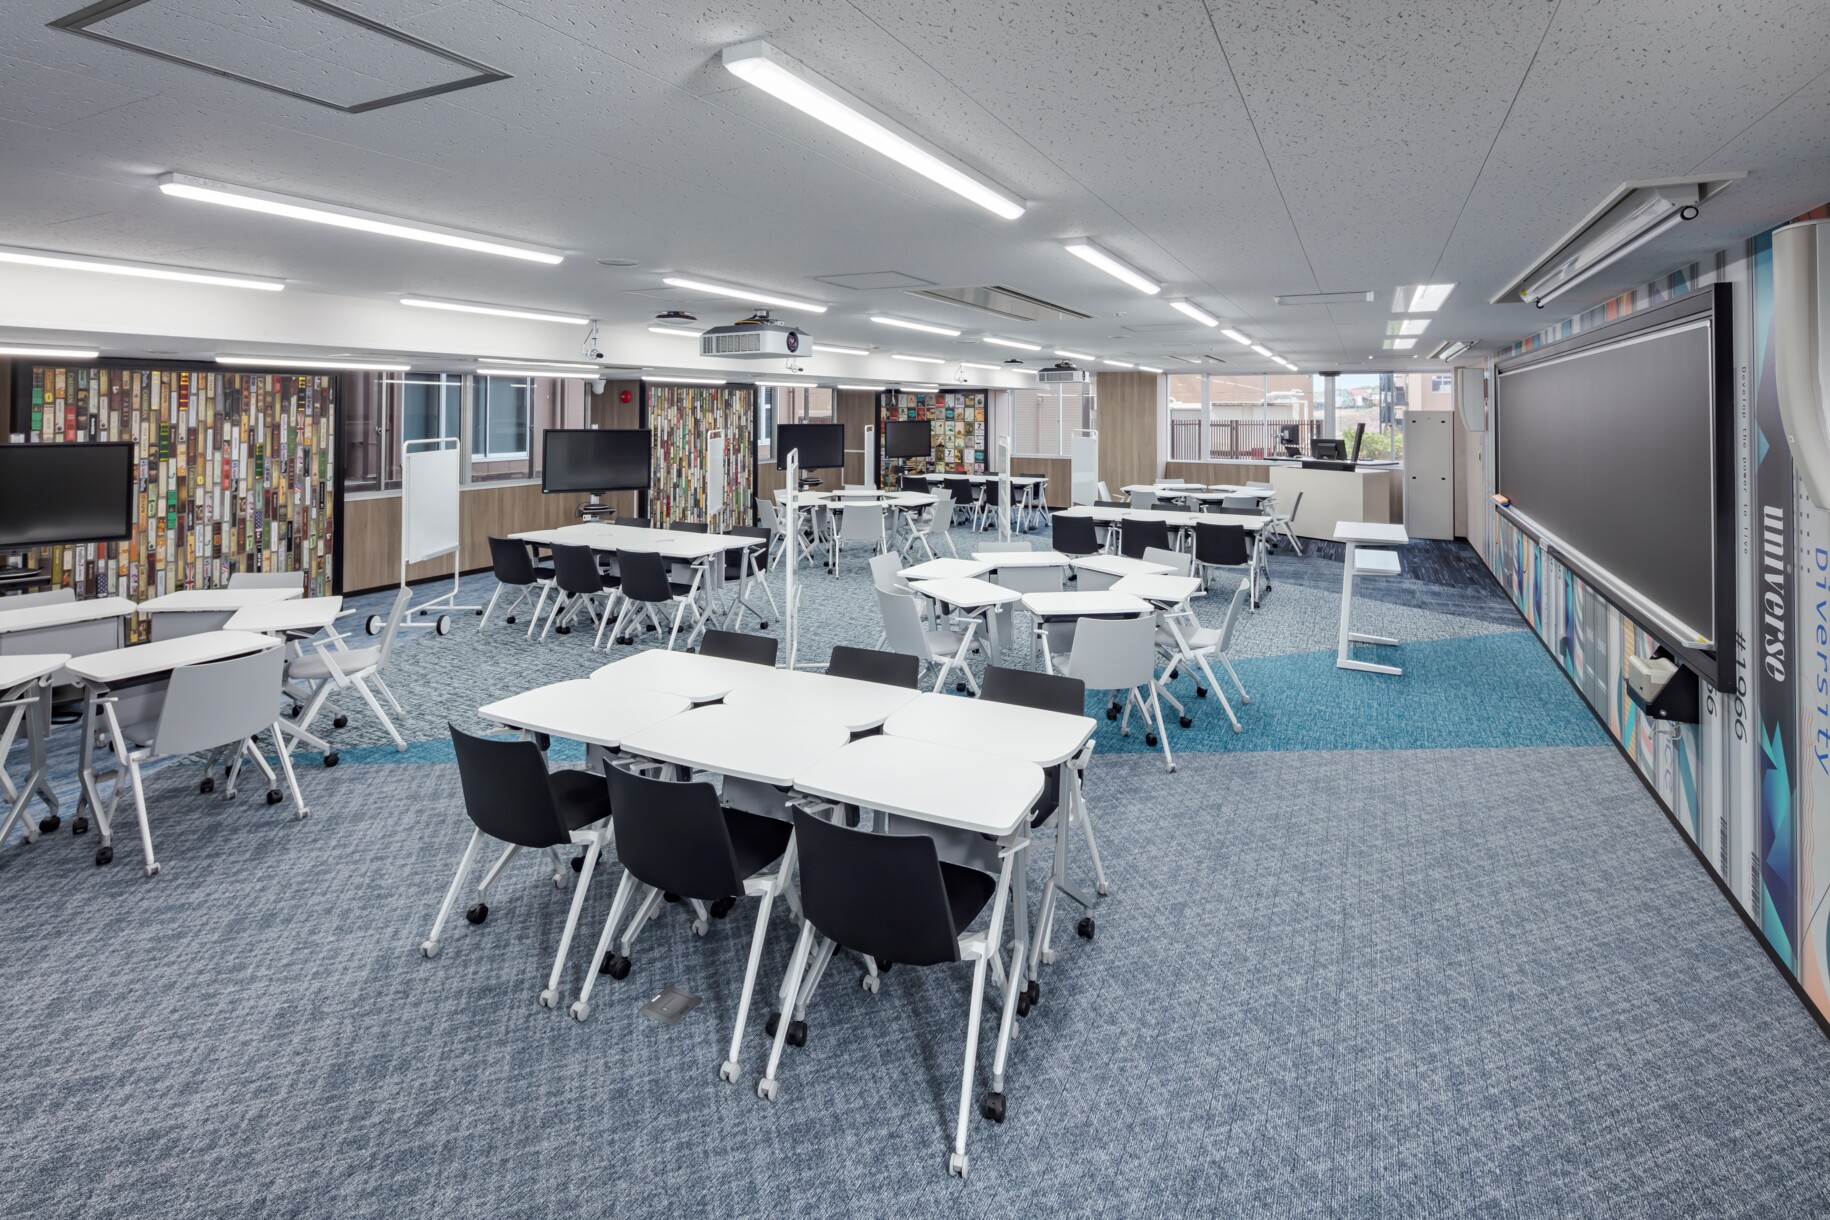 Active learning classroom Teikyo University, Tokyo, Japan